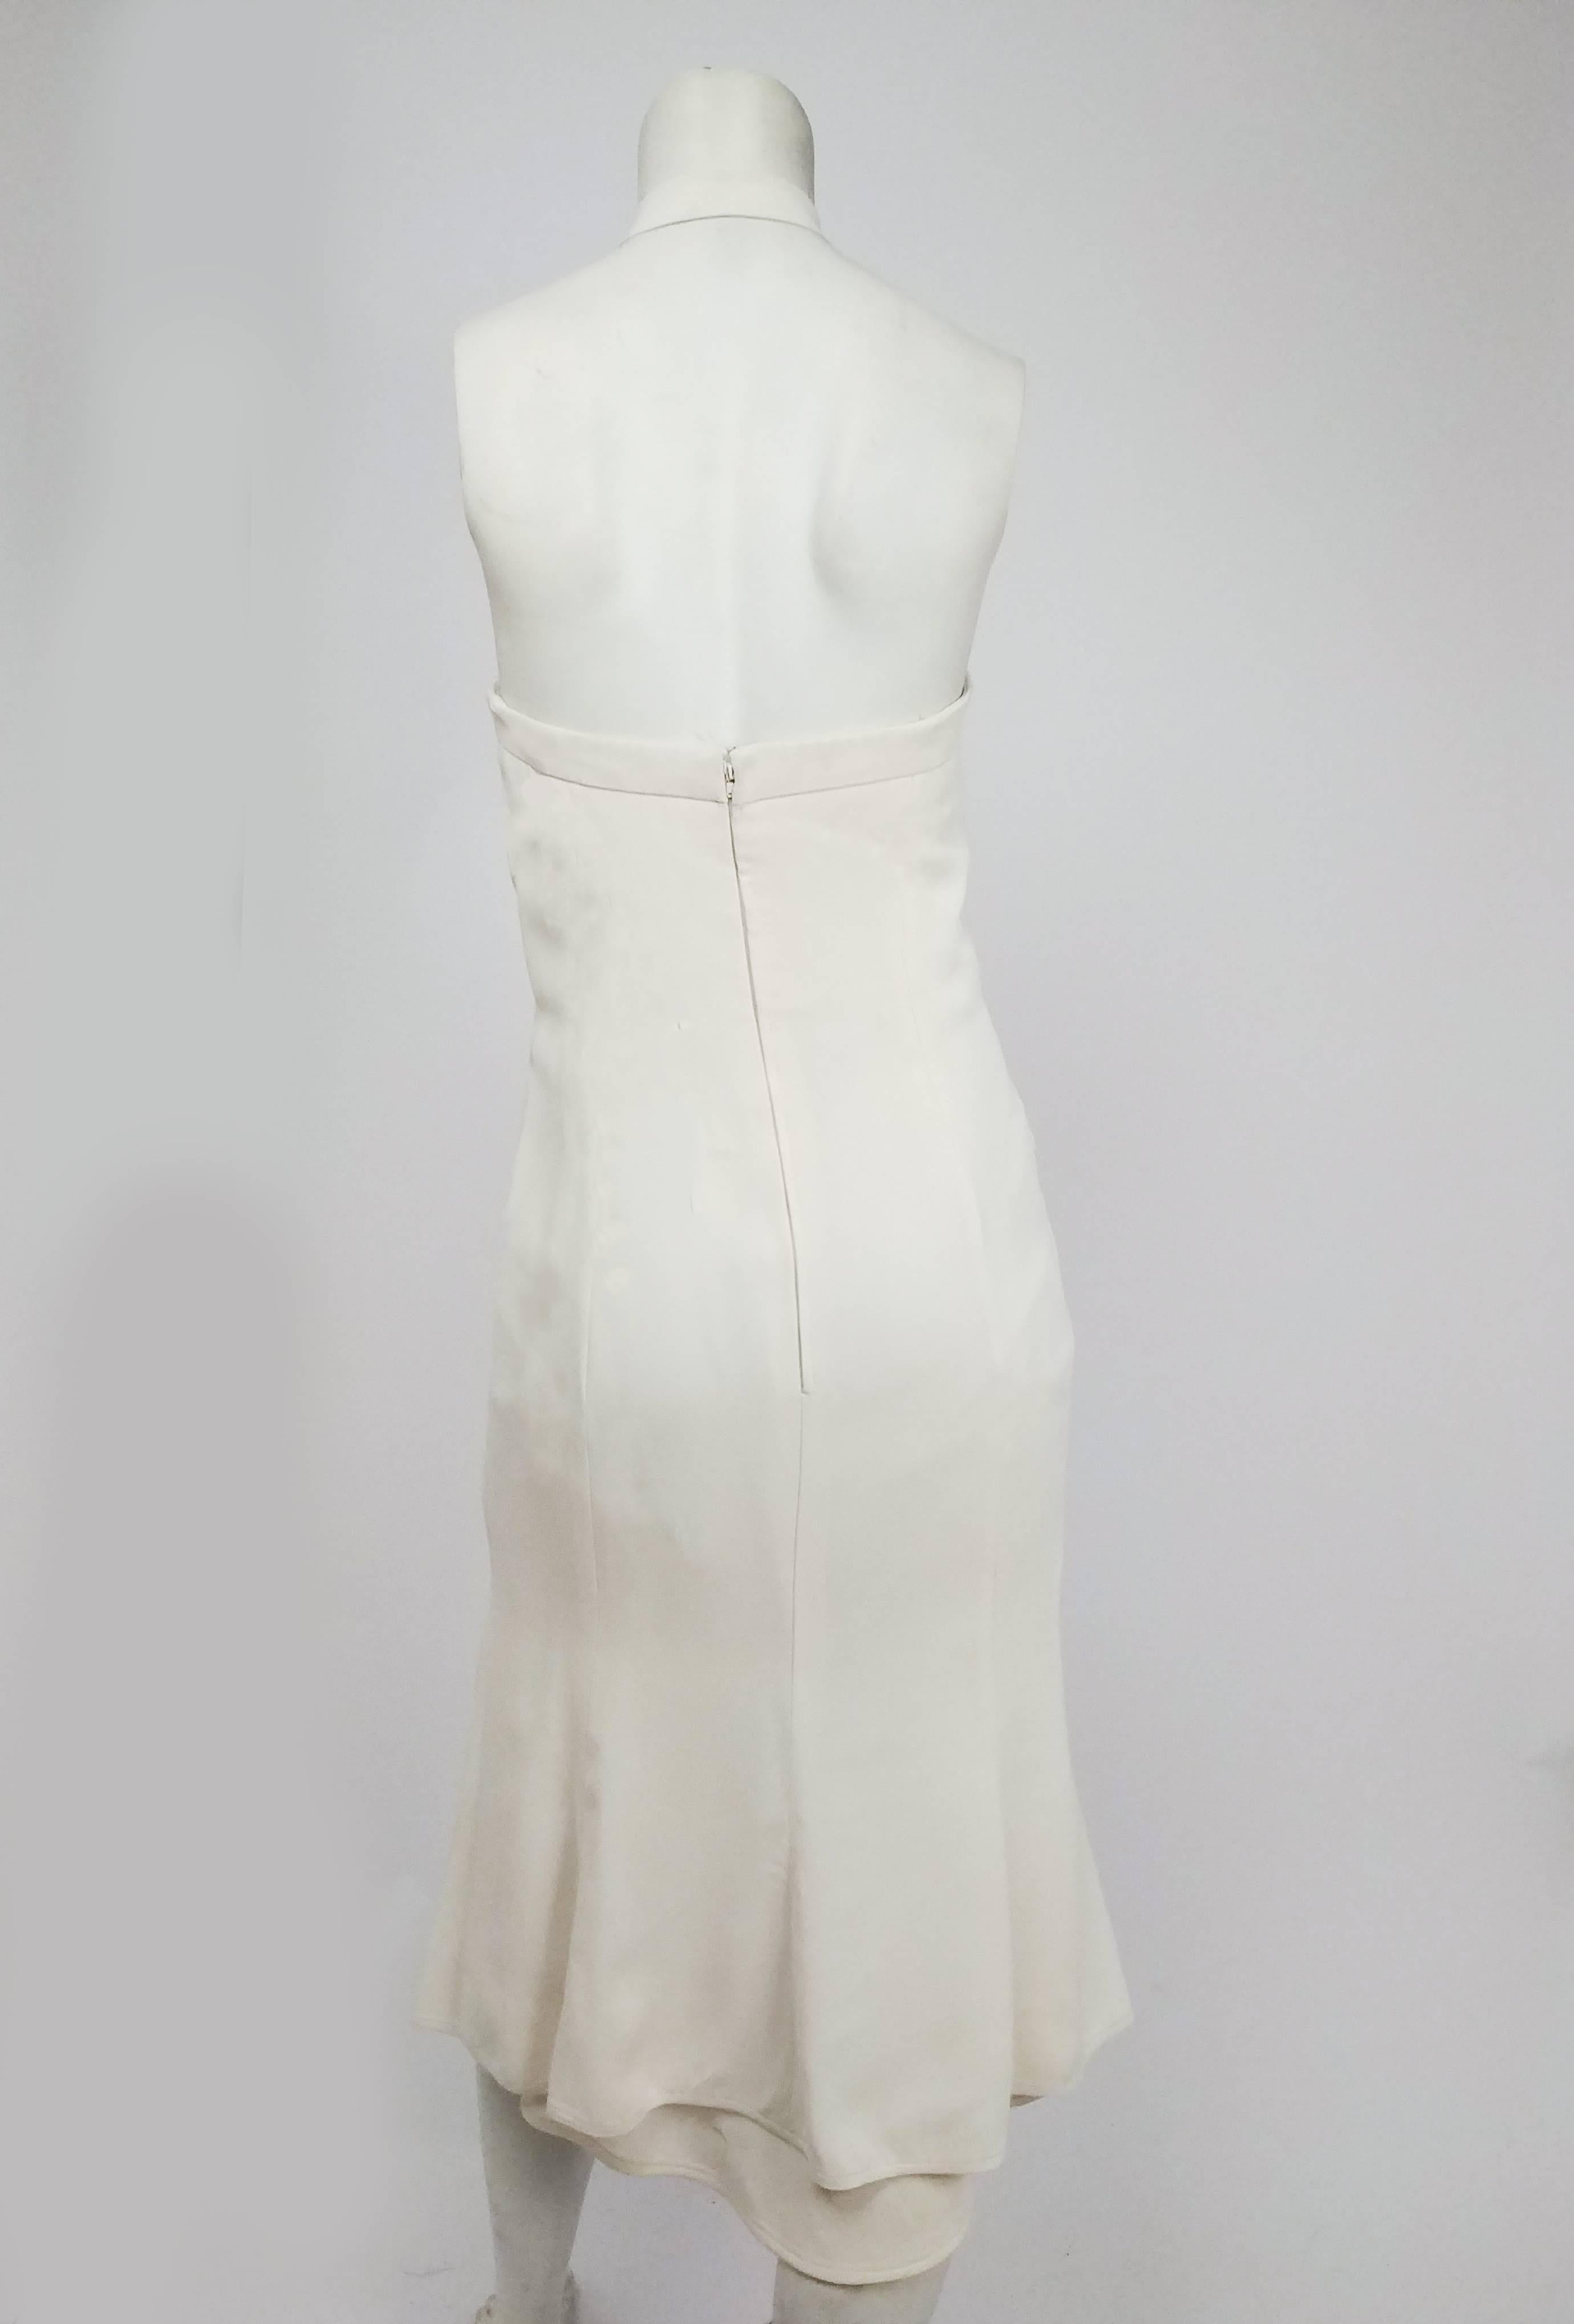 Gray Emanuel Ungaro White Halter Neck Cocktail Dress, 1990s 